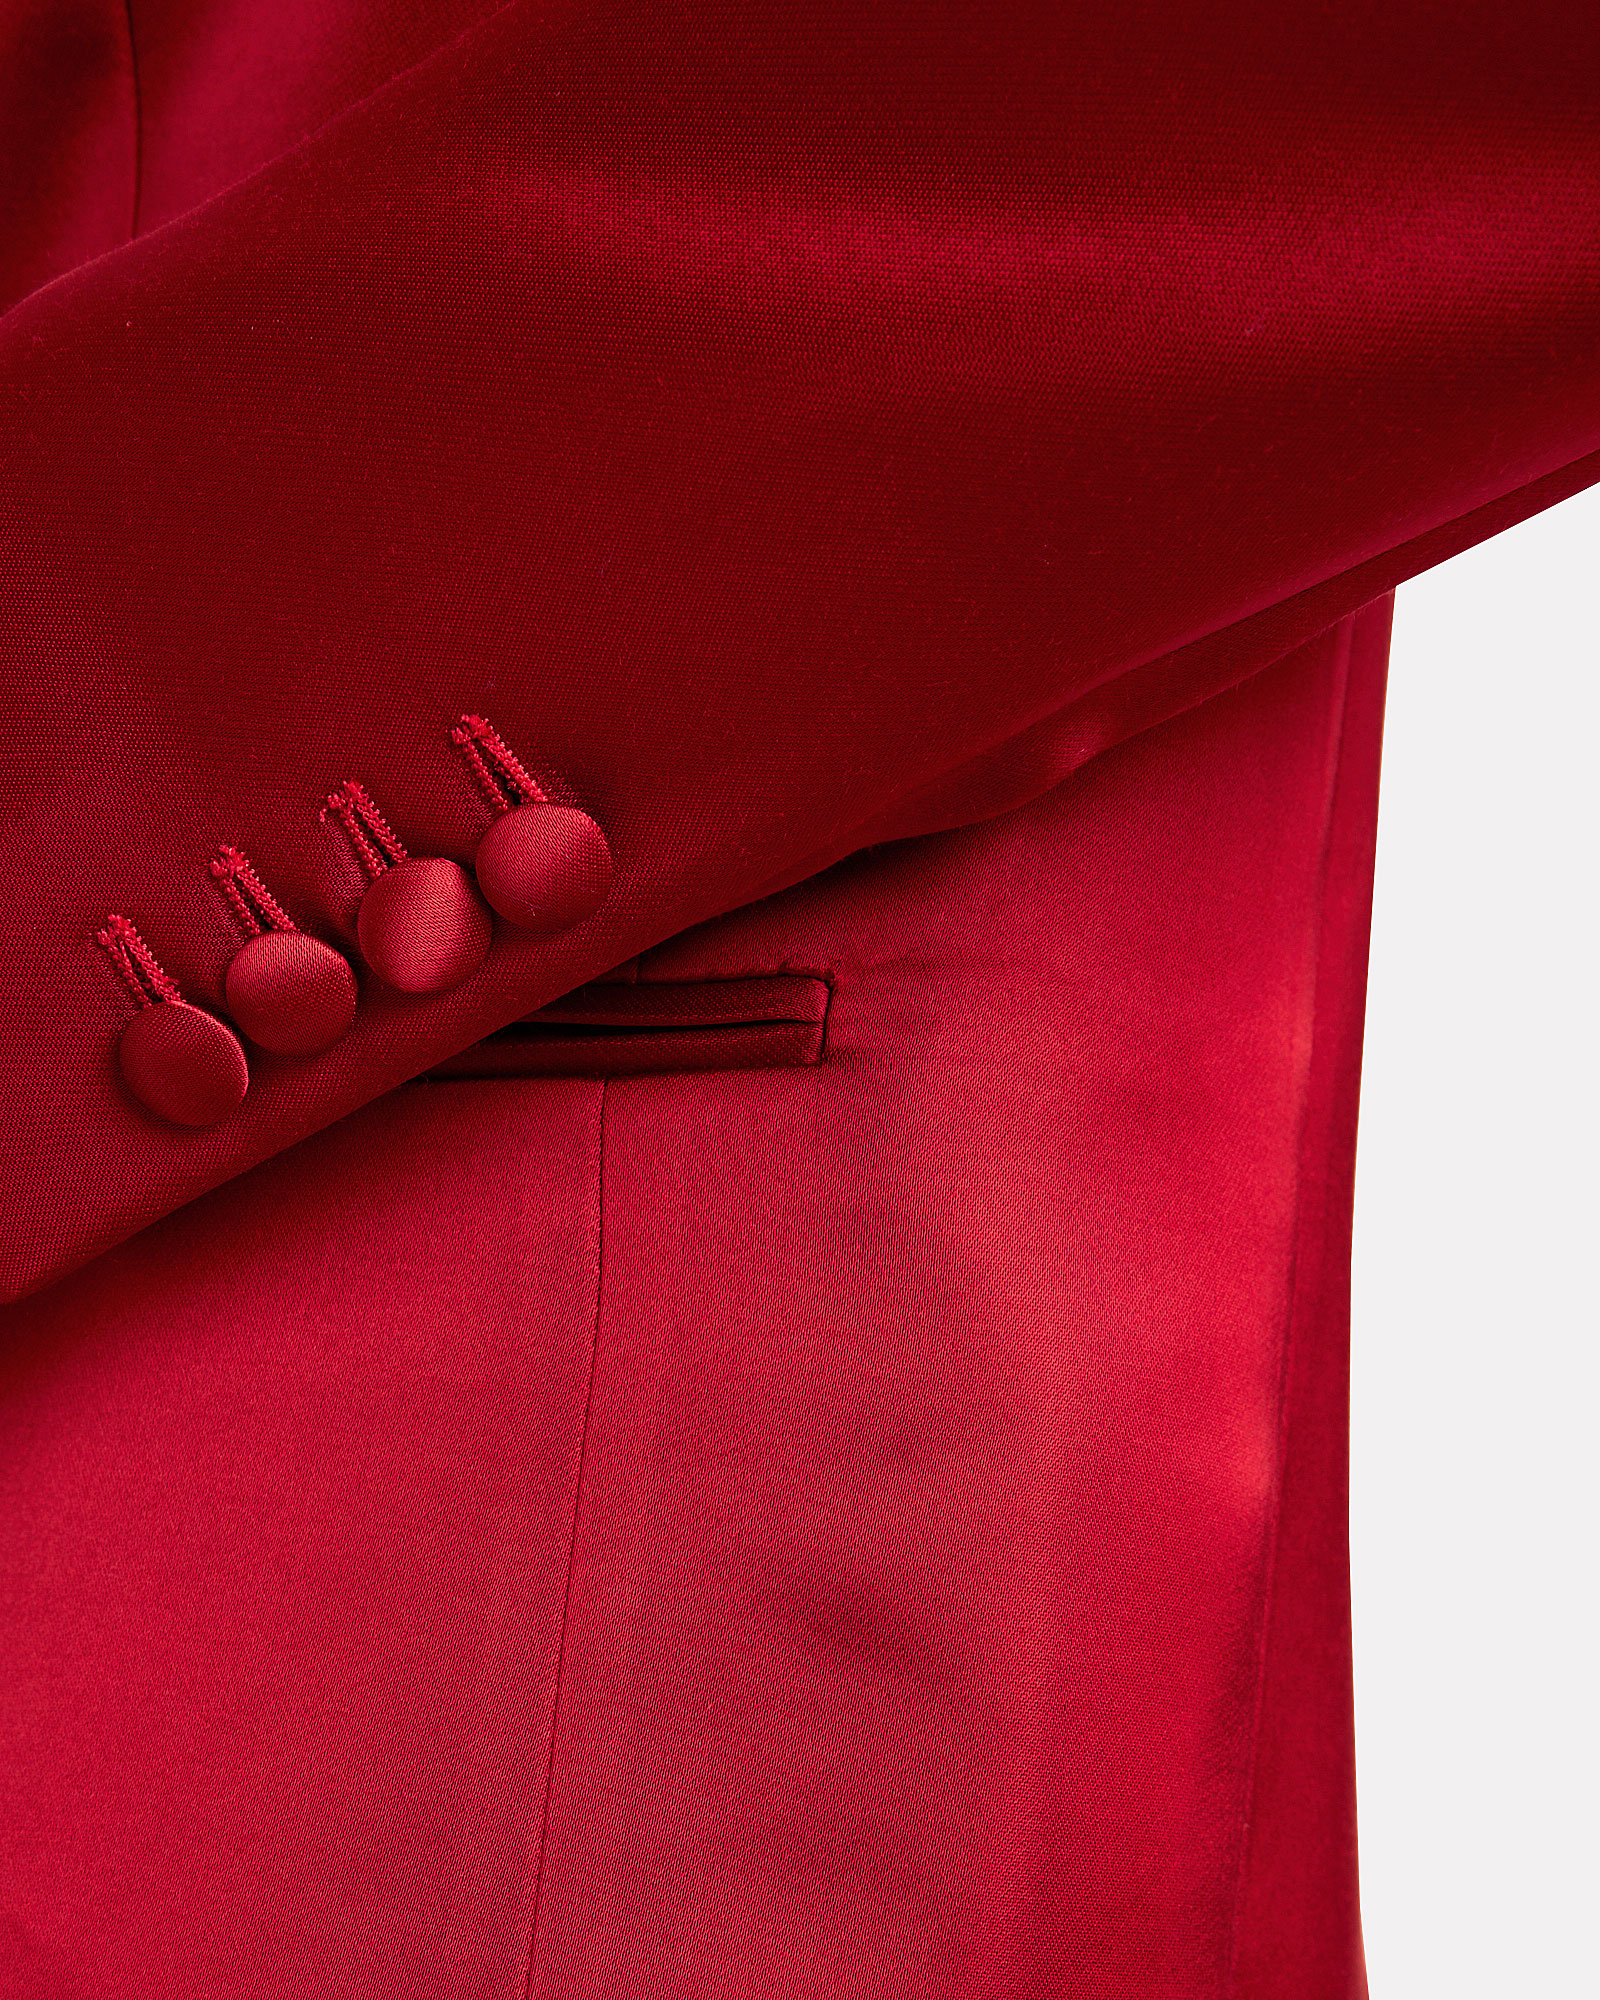 Helmut Lang | Heavy Satin Tailored Blazer | INTERMIX®